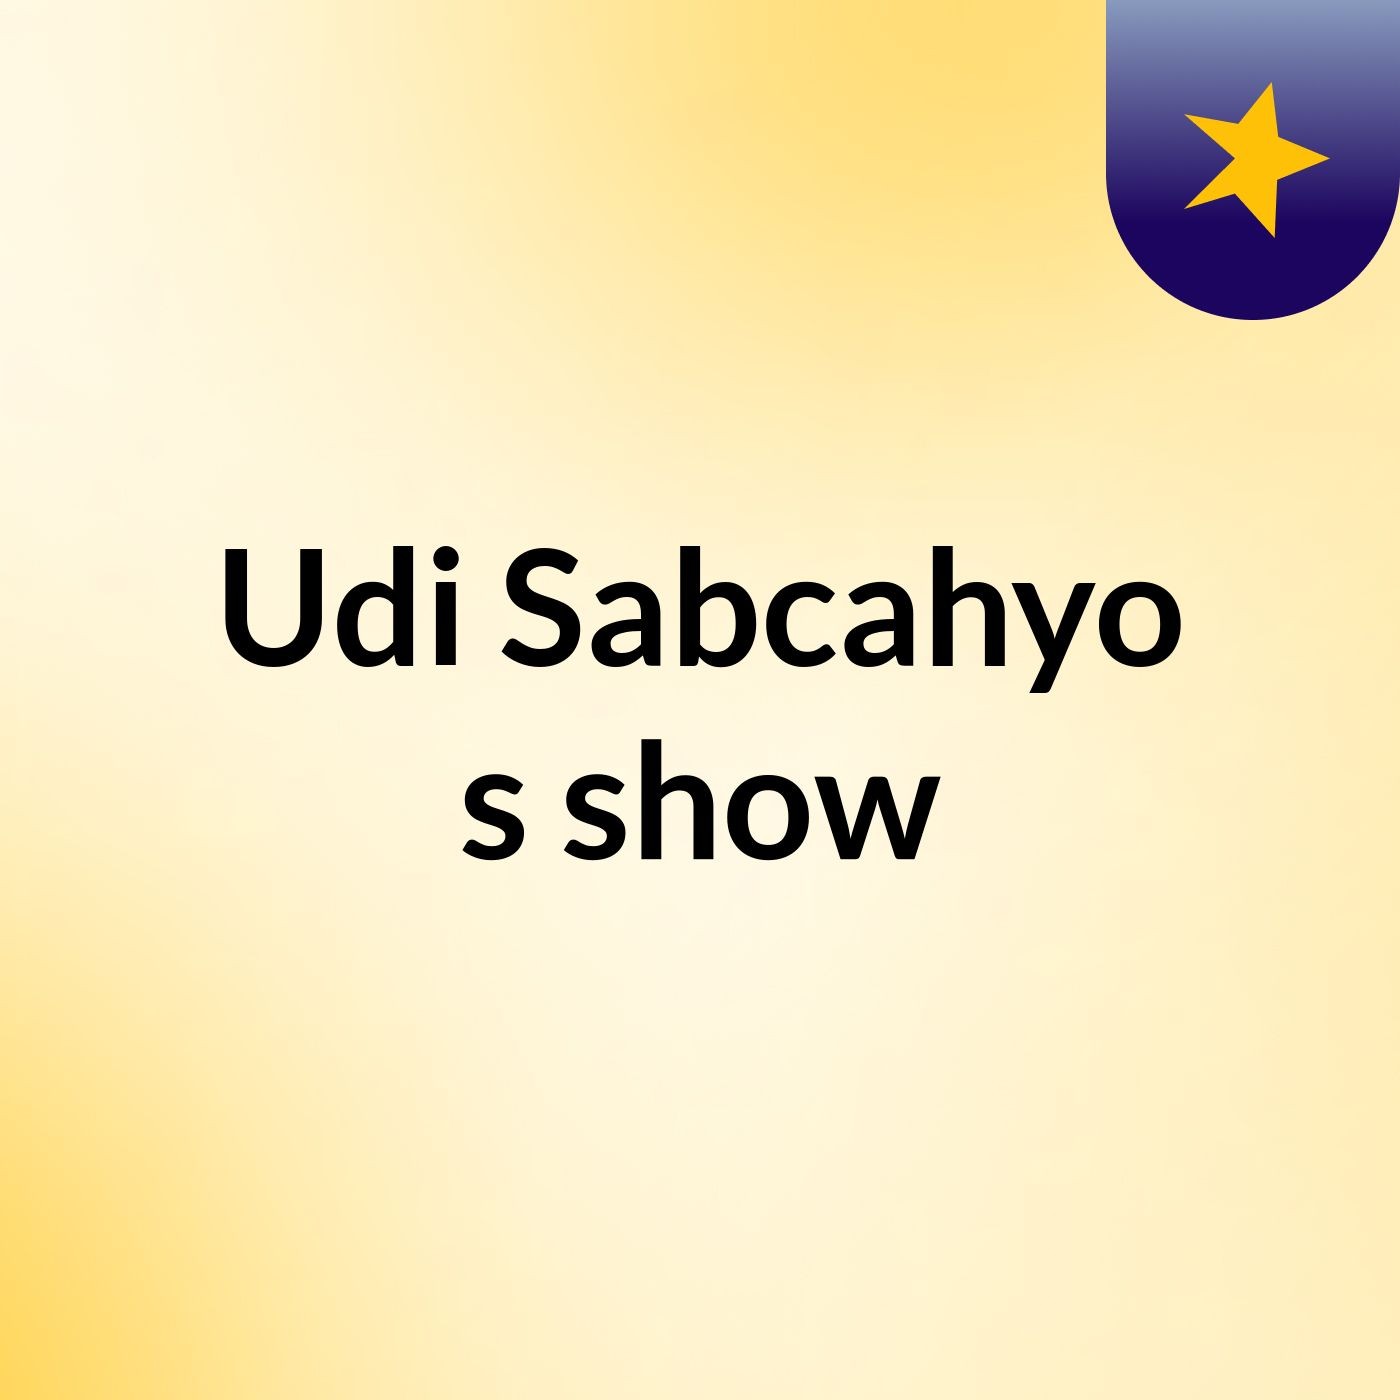 Udi Sabcahyo's show